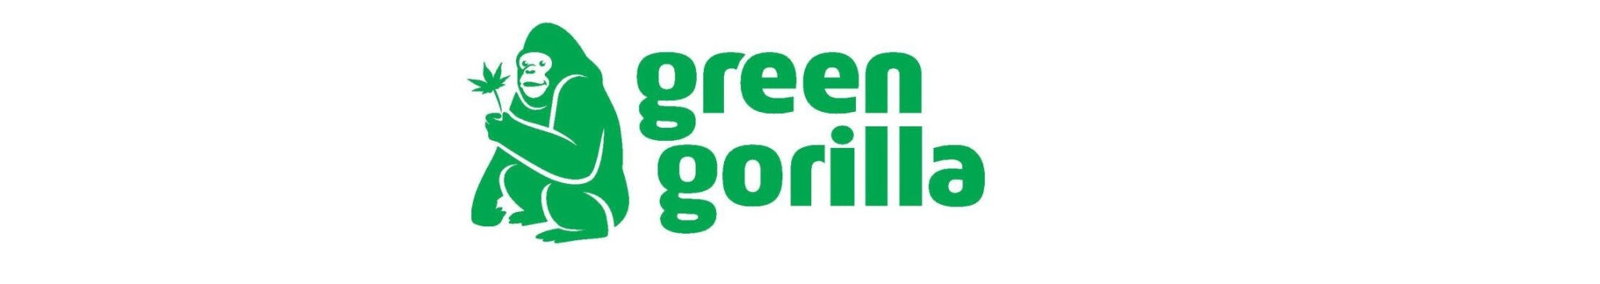 image of green gorilla company background